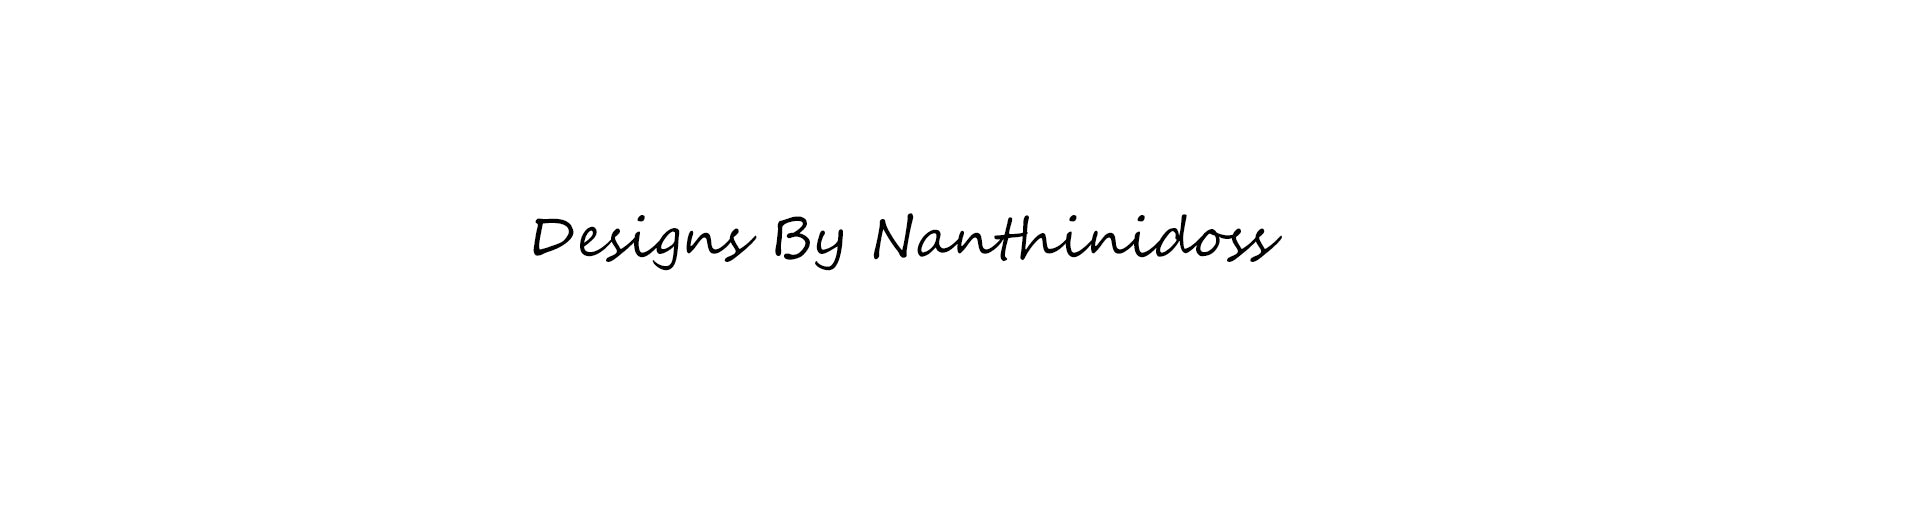 Nanthinidoss